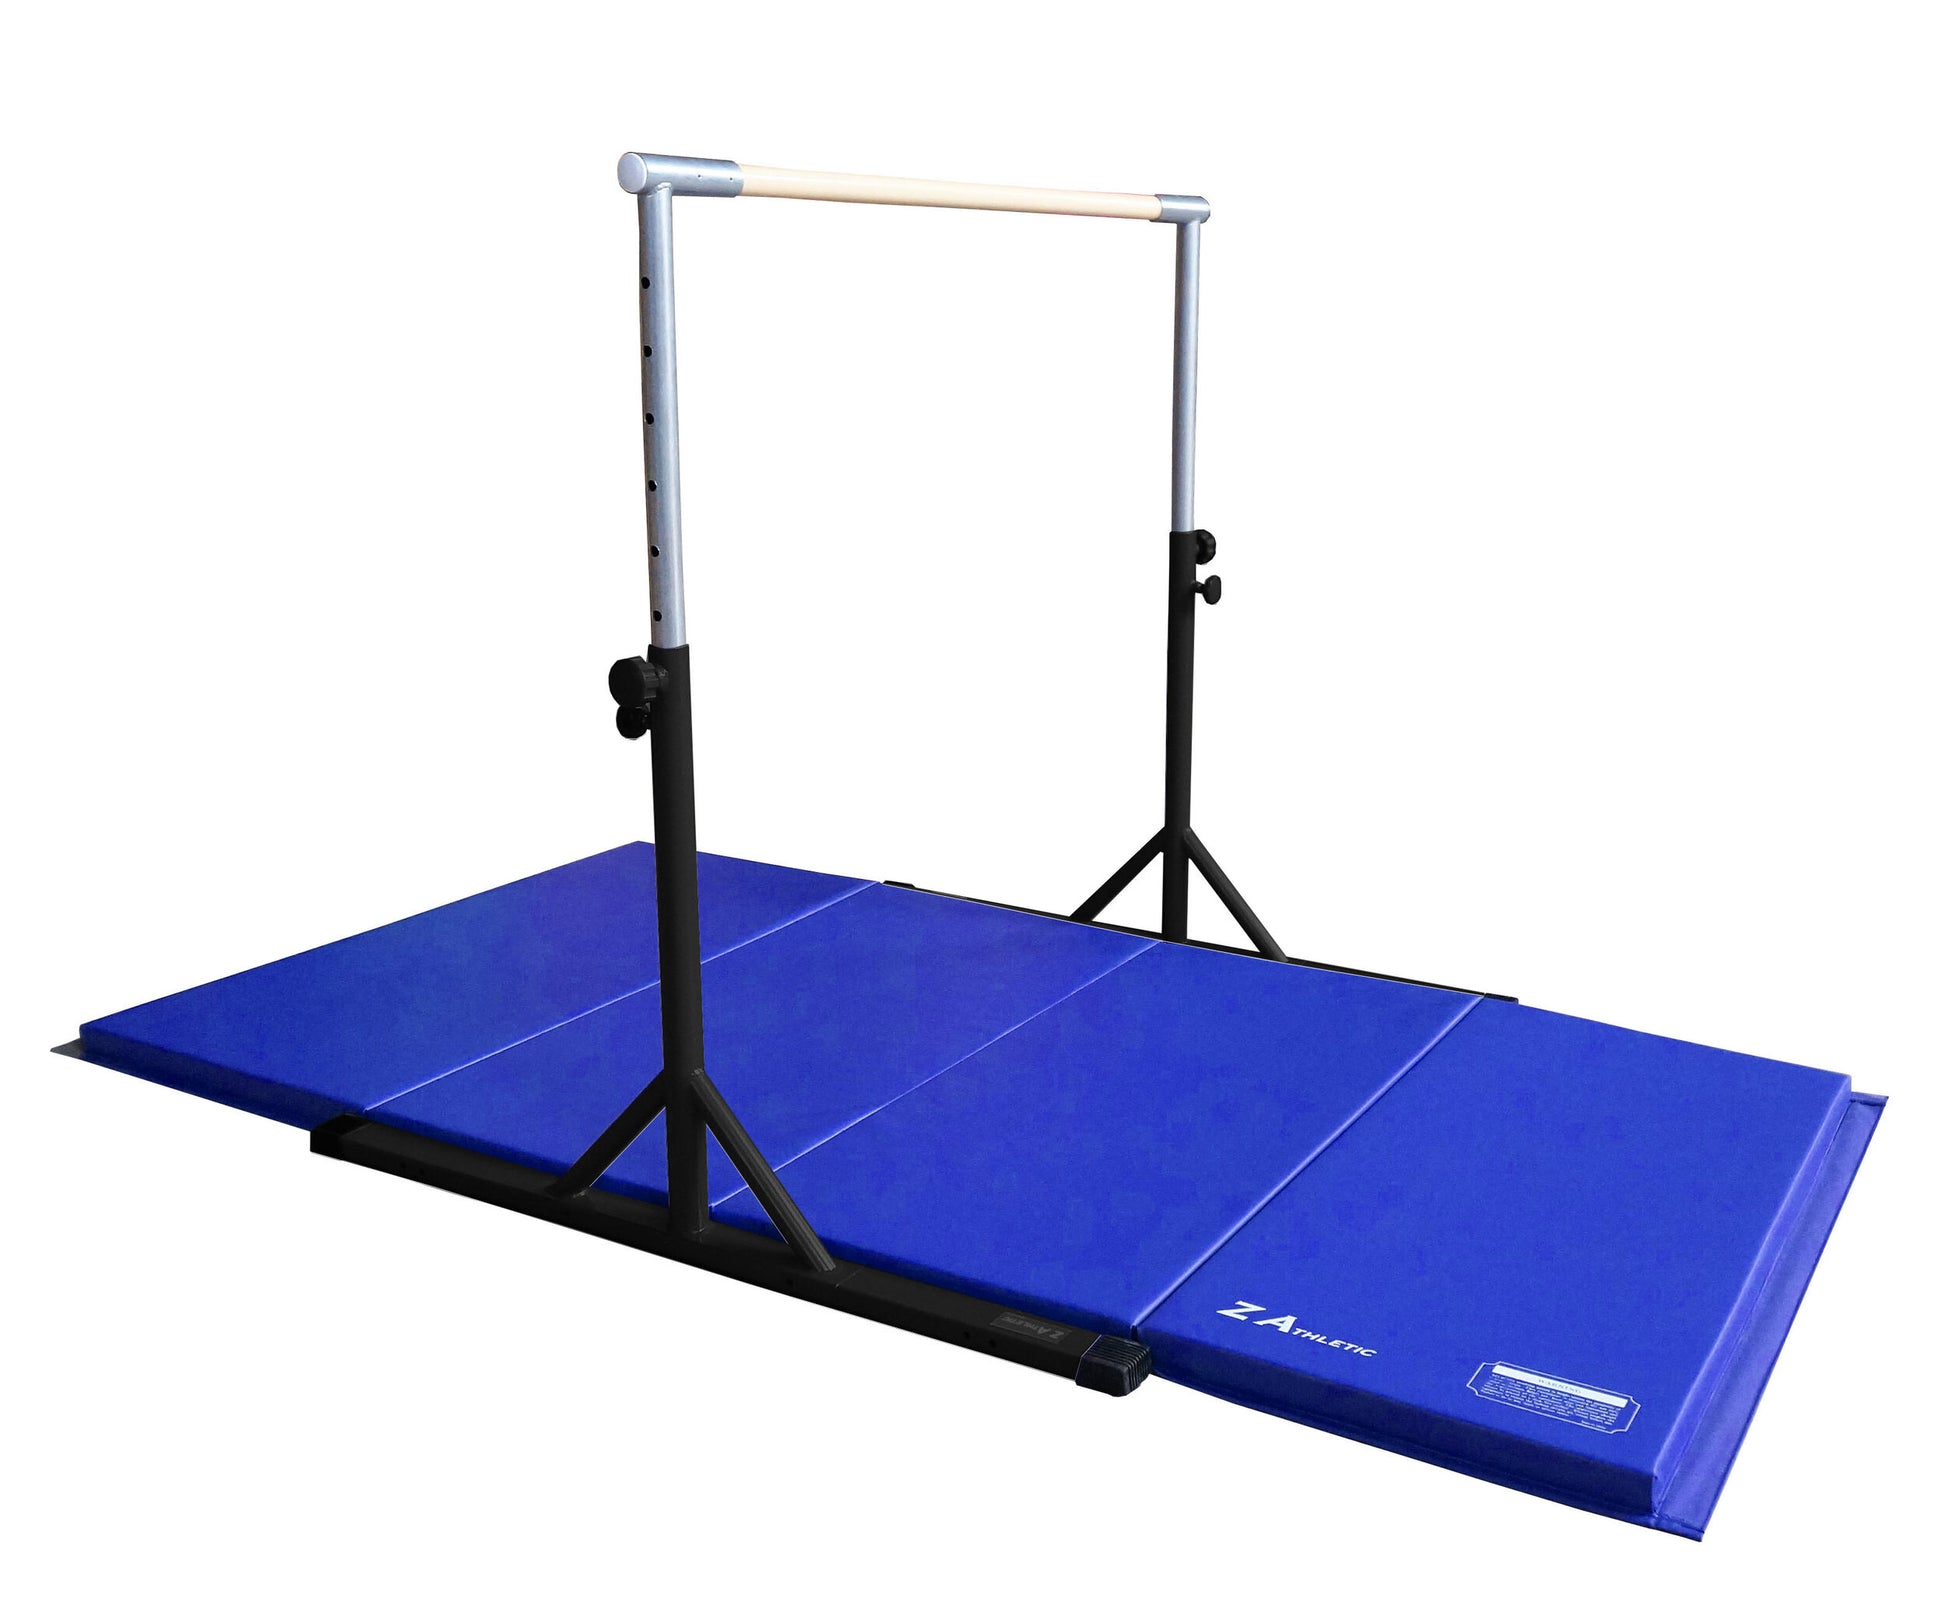  Athletic Bar Expandable Gymnastics Kip Bar Set with